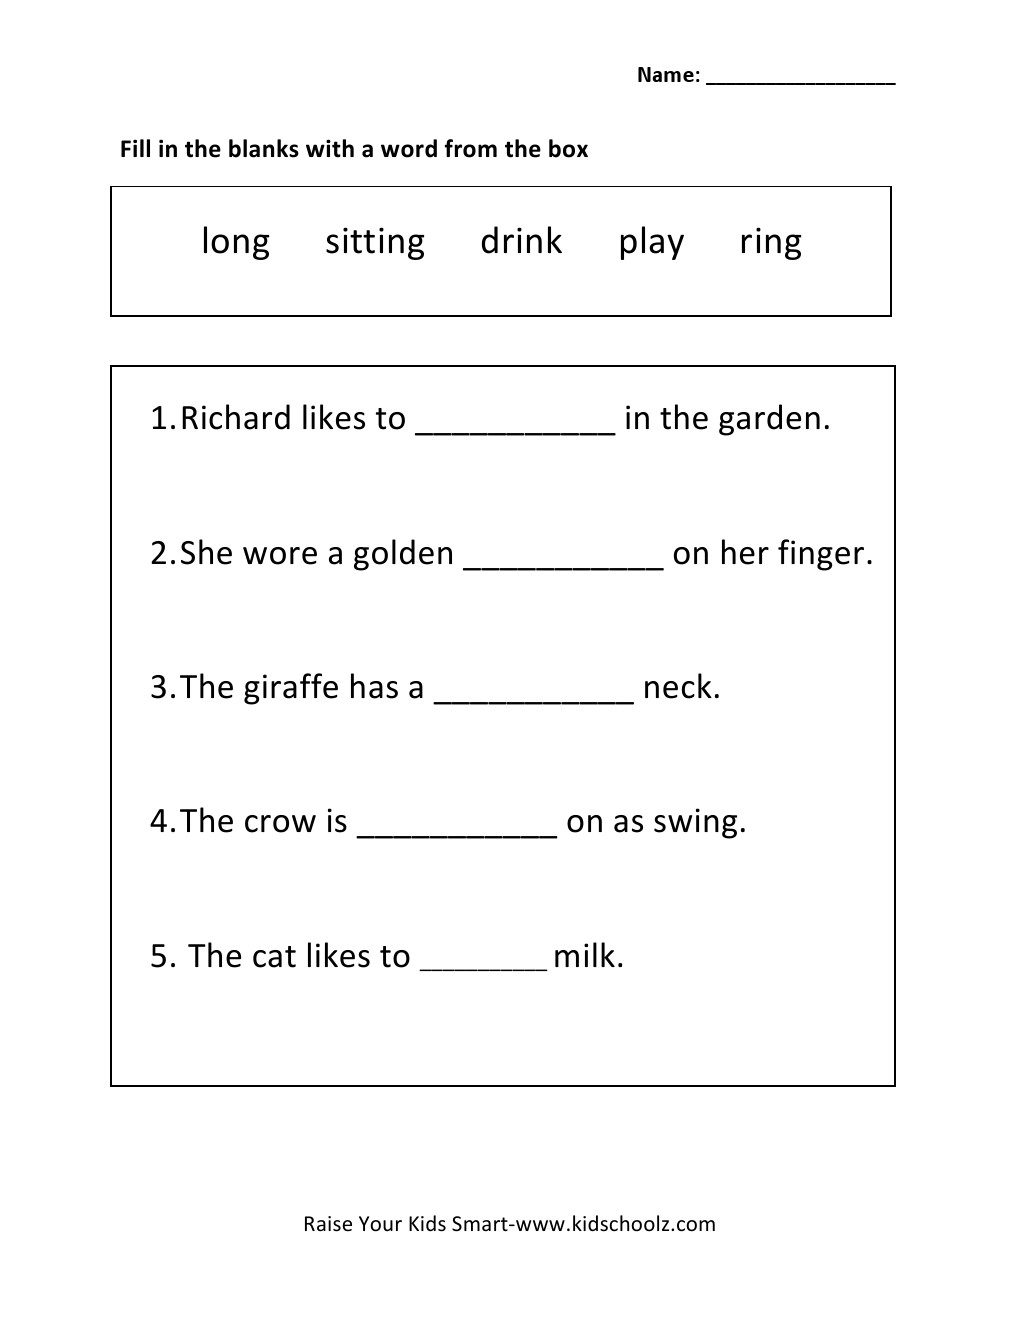 rewriting-incomplete-sentences-worksheet-have-fun-teaching